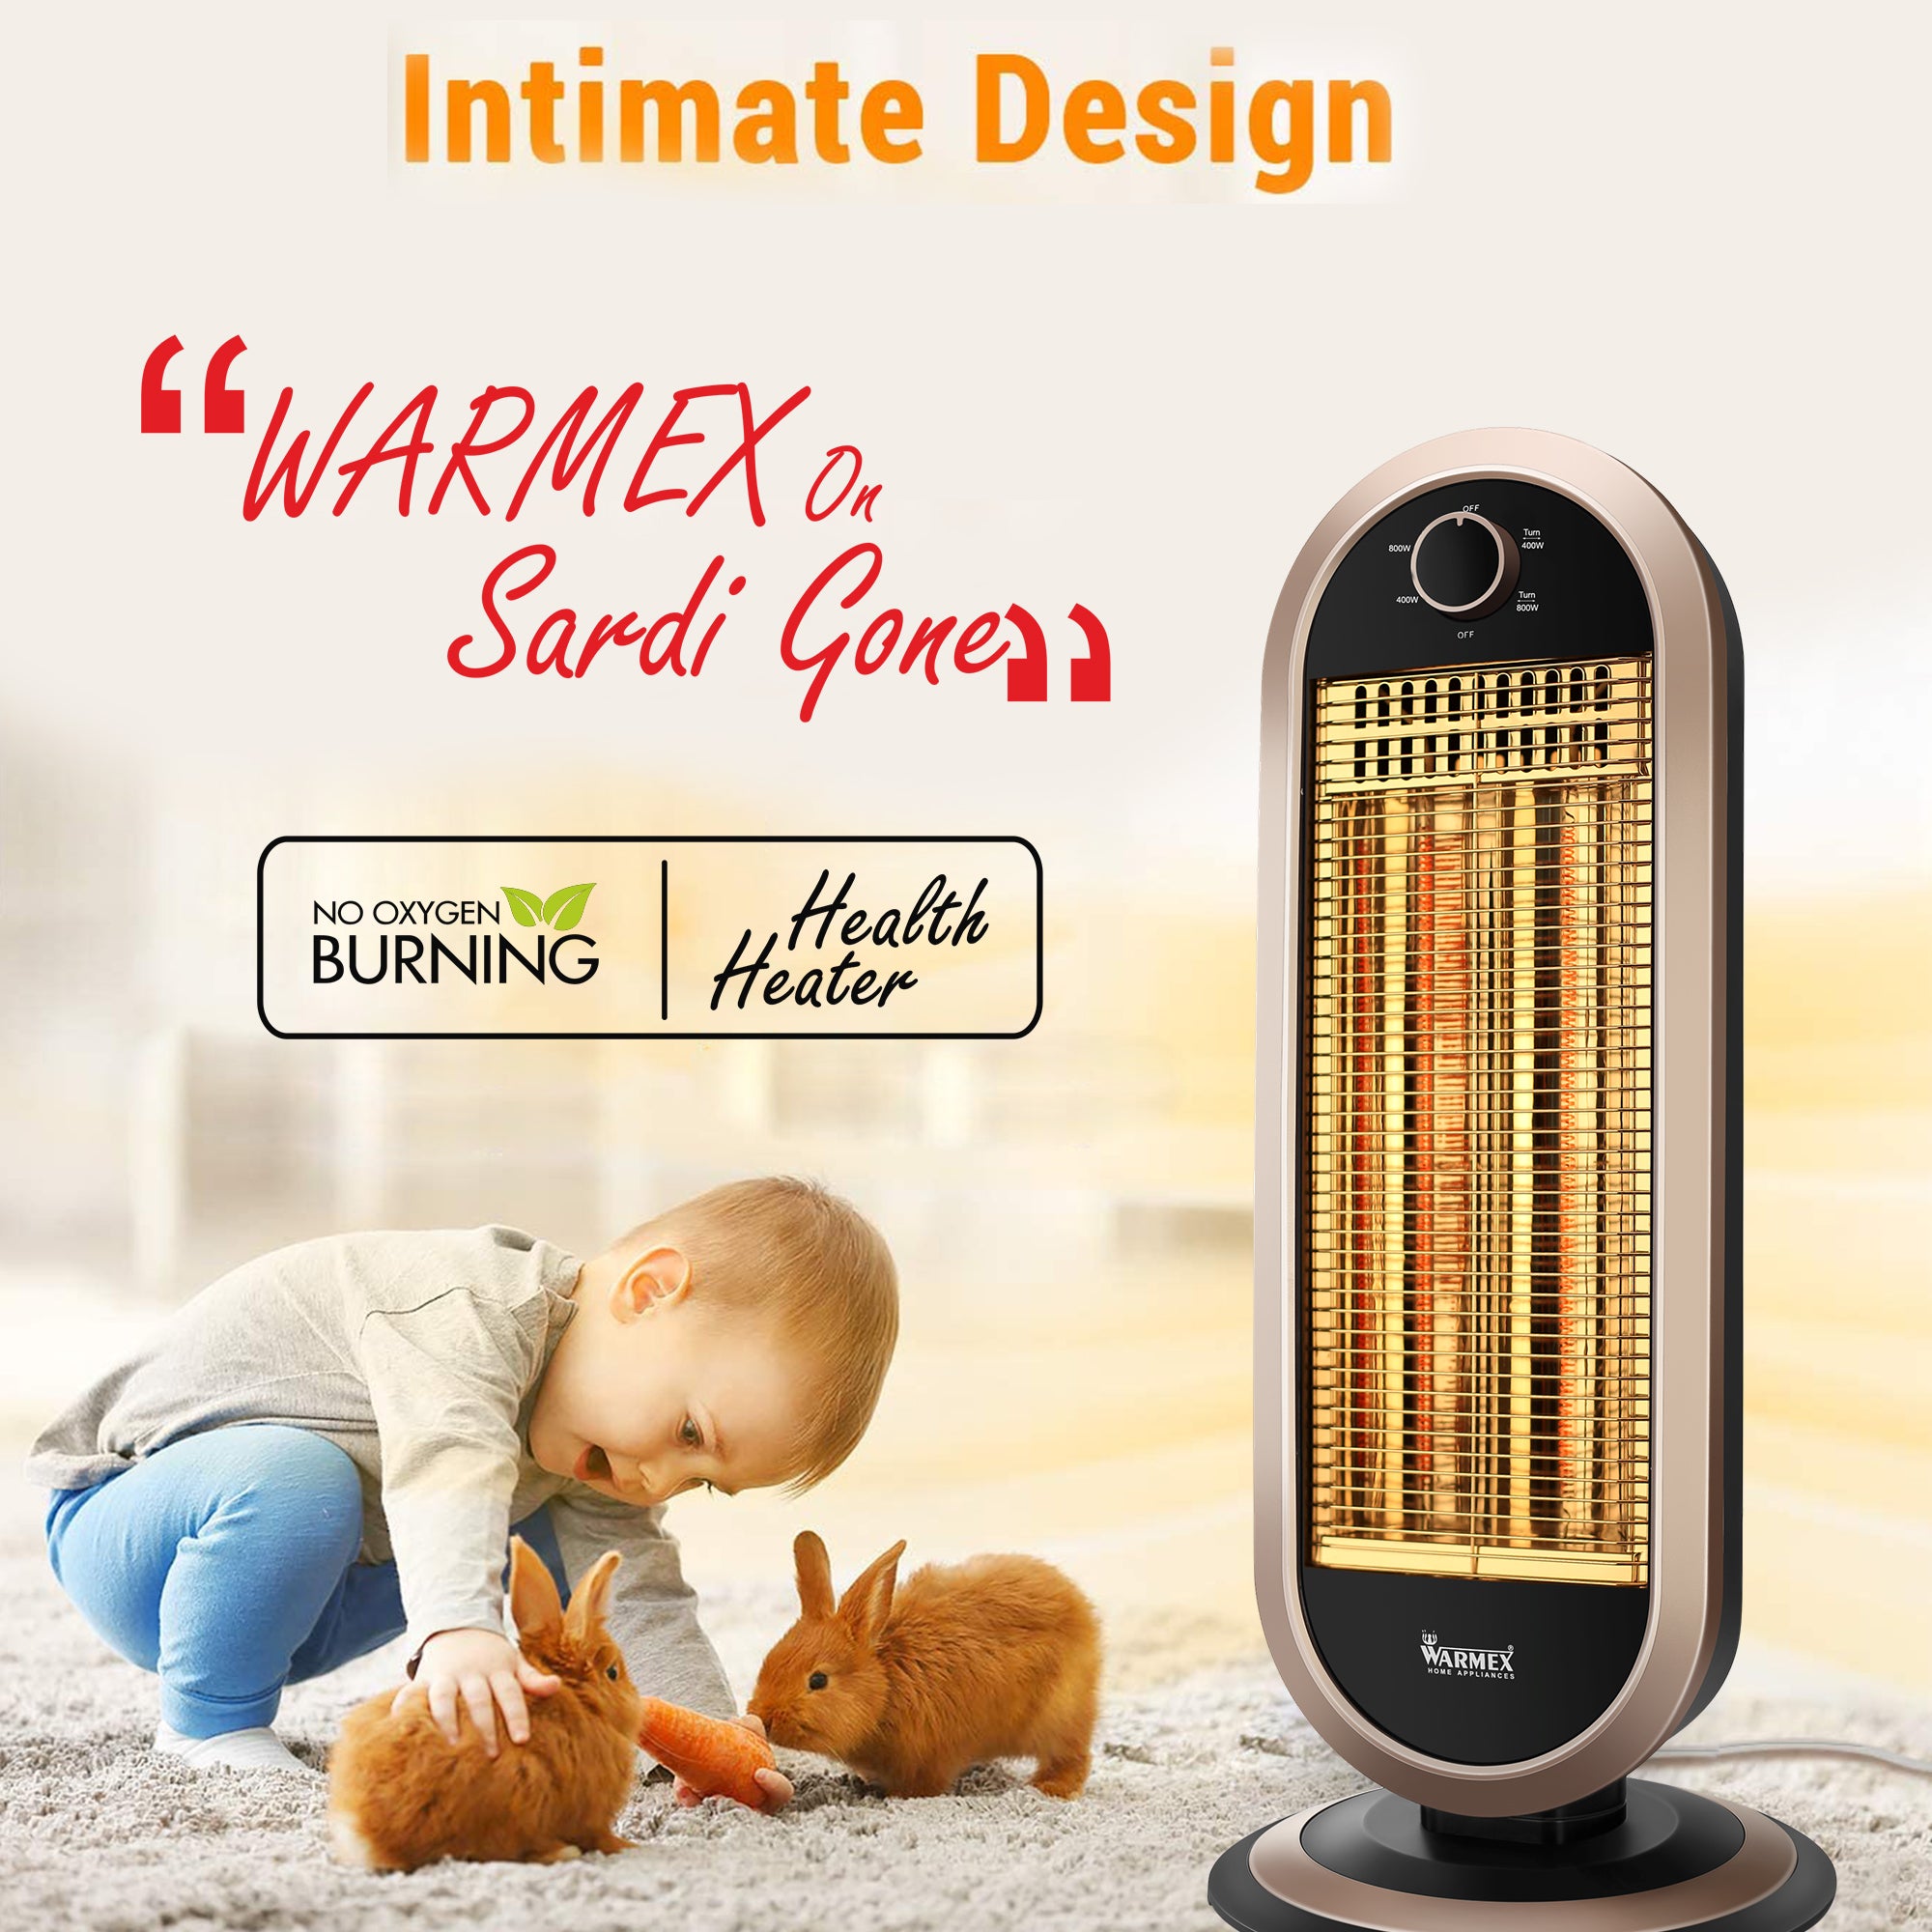 Warmex Room Heater 900 Watts GLEAM warmexhomeappliances